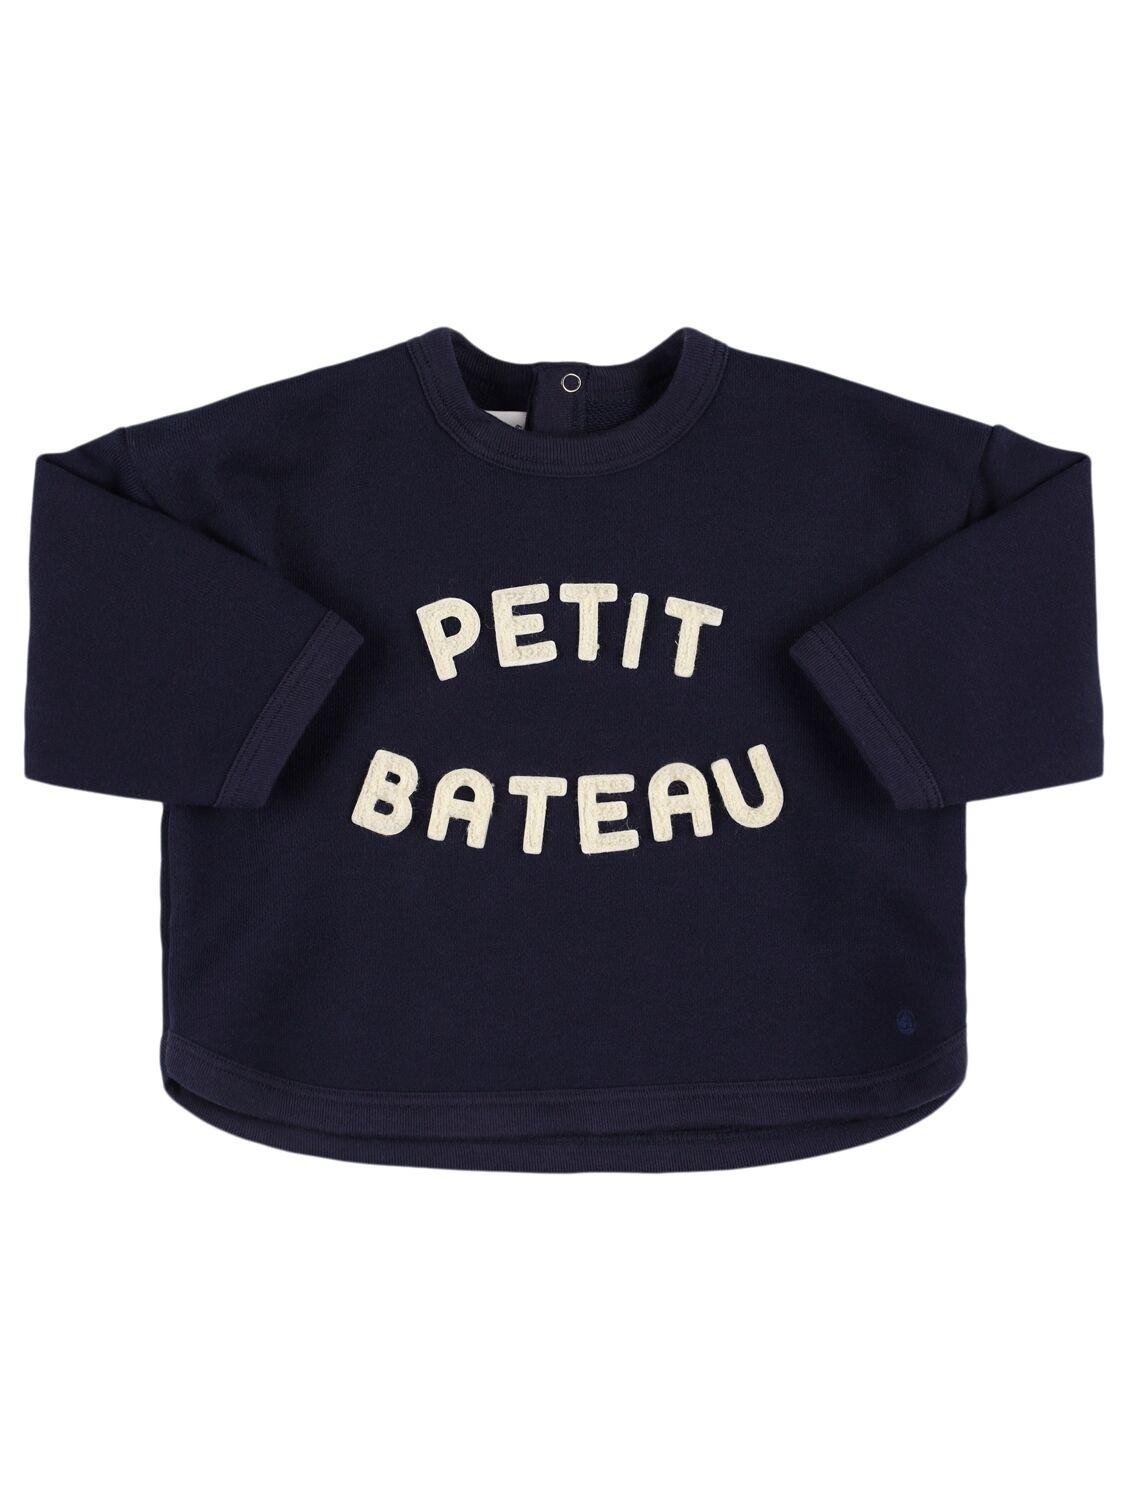 Cotton Sweatshirt by PETIT BATEAU